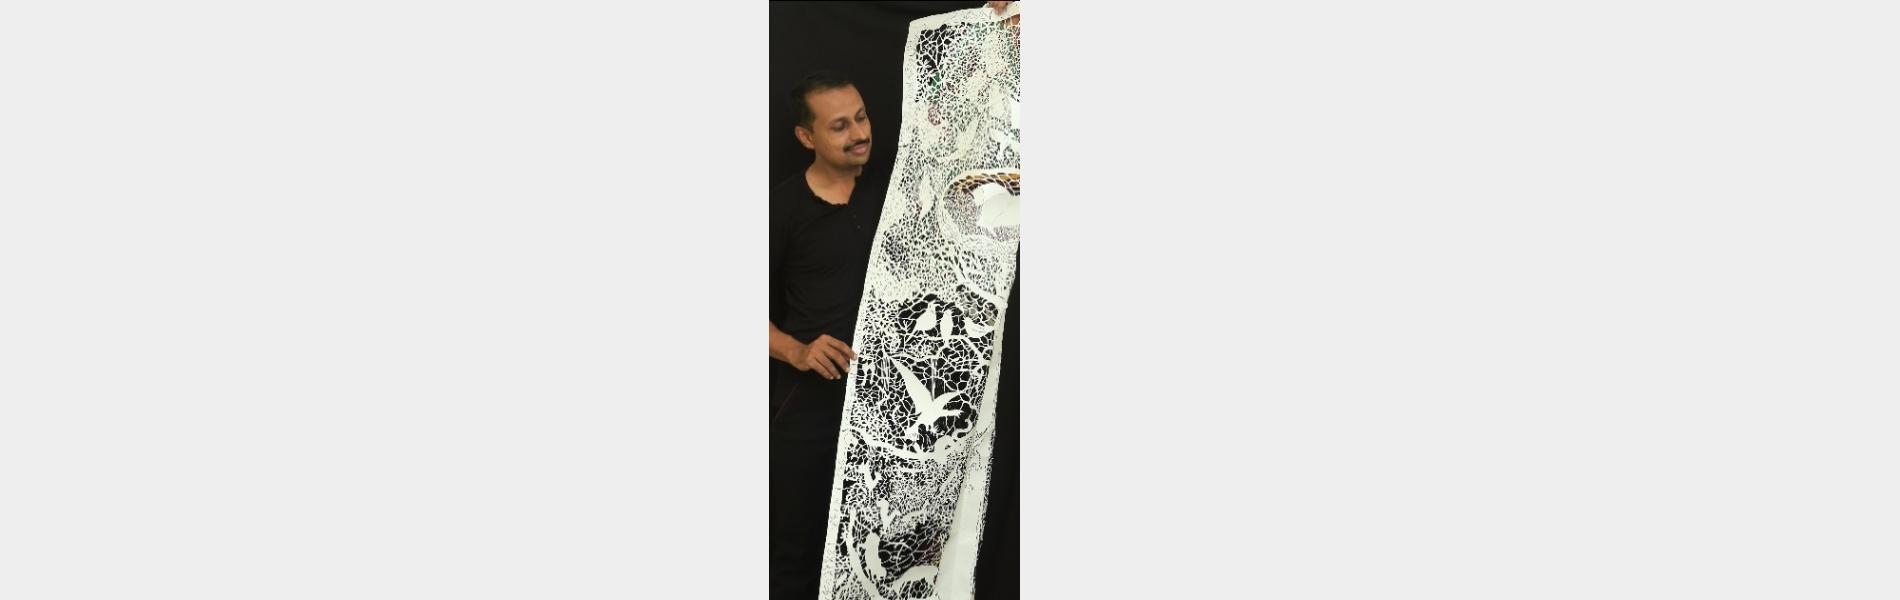 Dr Vijay Jadhav's paper carving art